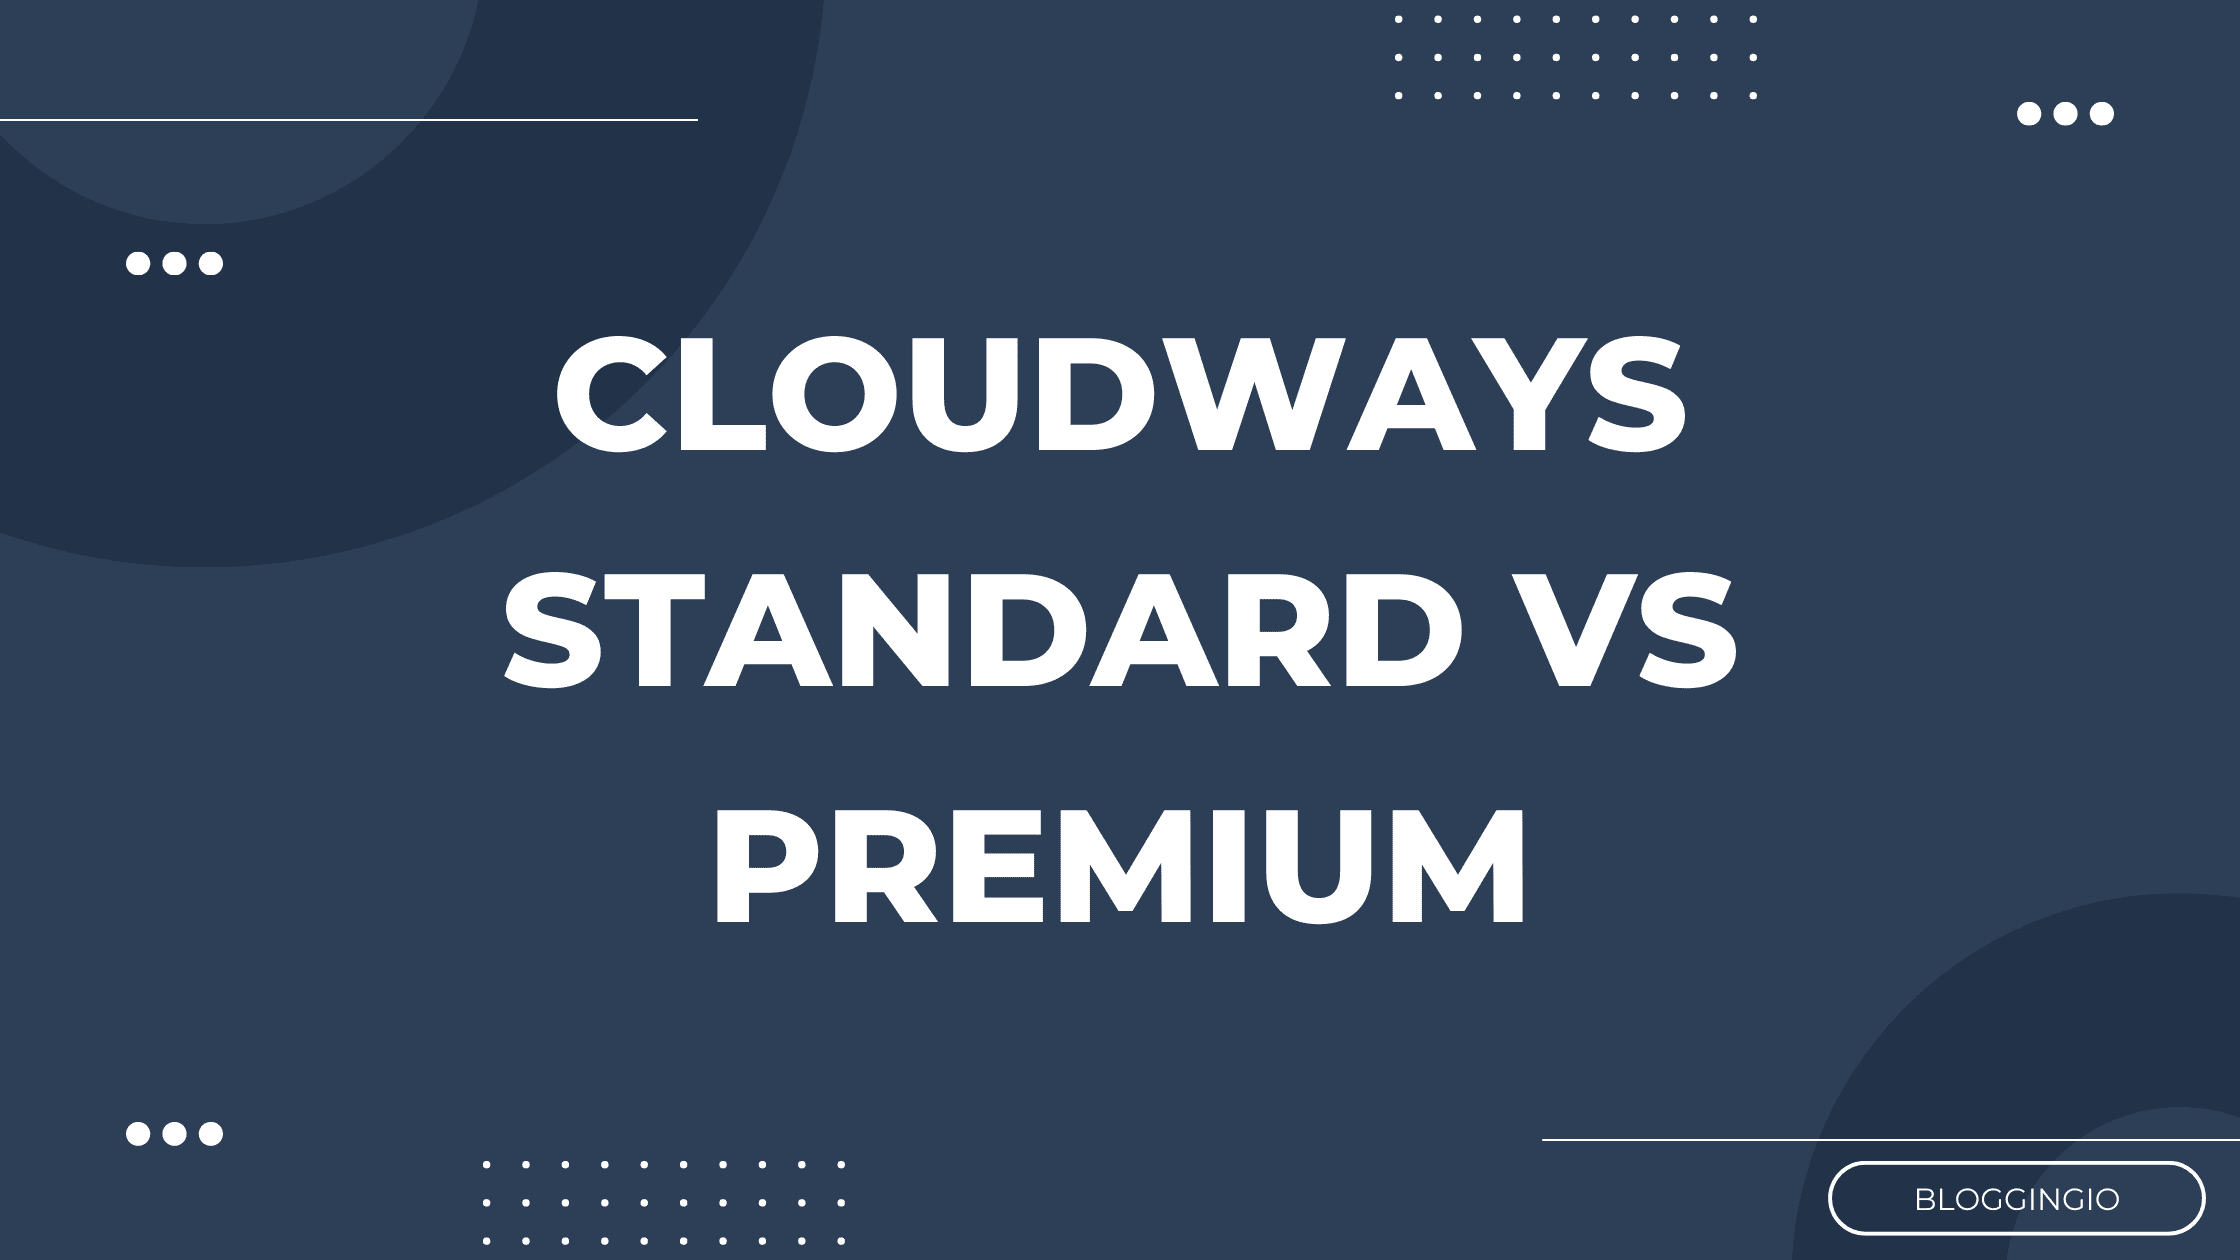 Cloudways Premium Vs Standard - Which is best? 1